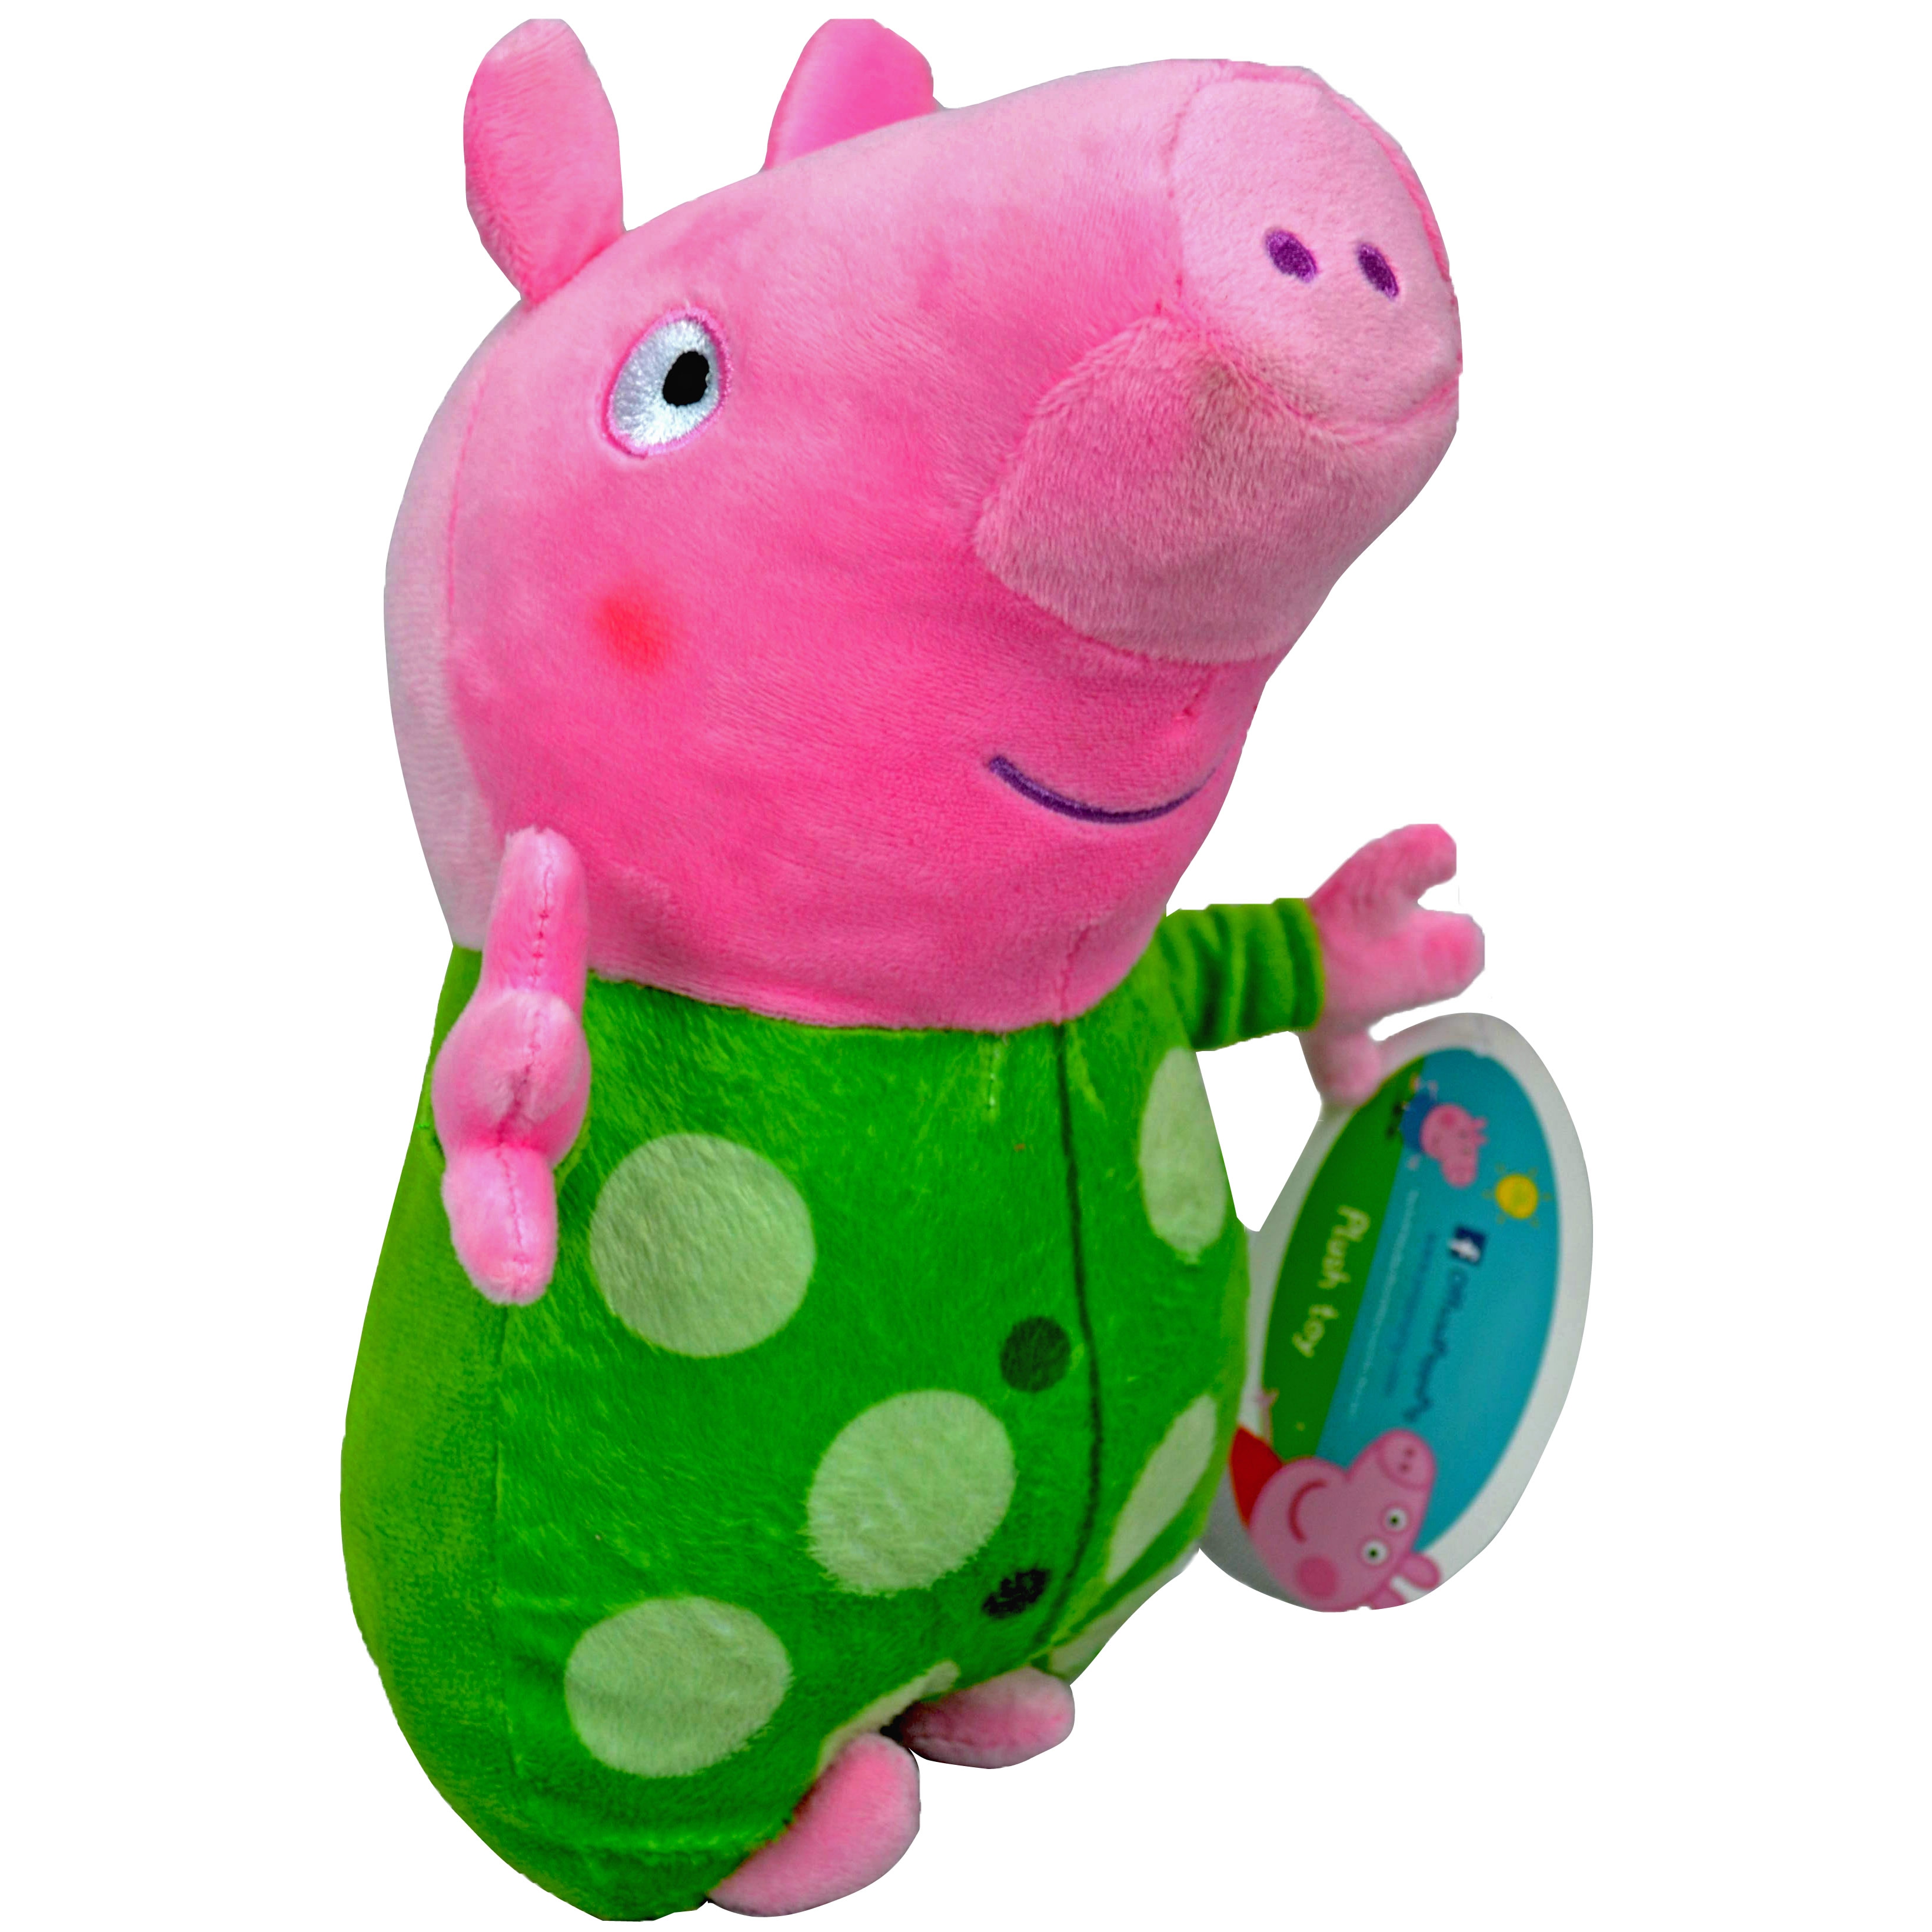 Peppa Pig 'Peppa' Green Dot 27cm Plush Soft Toy